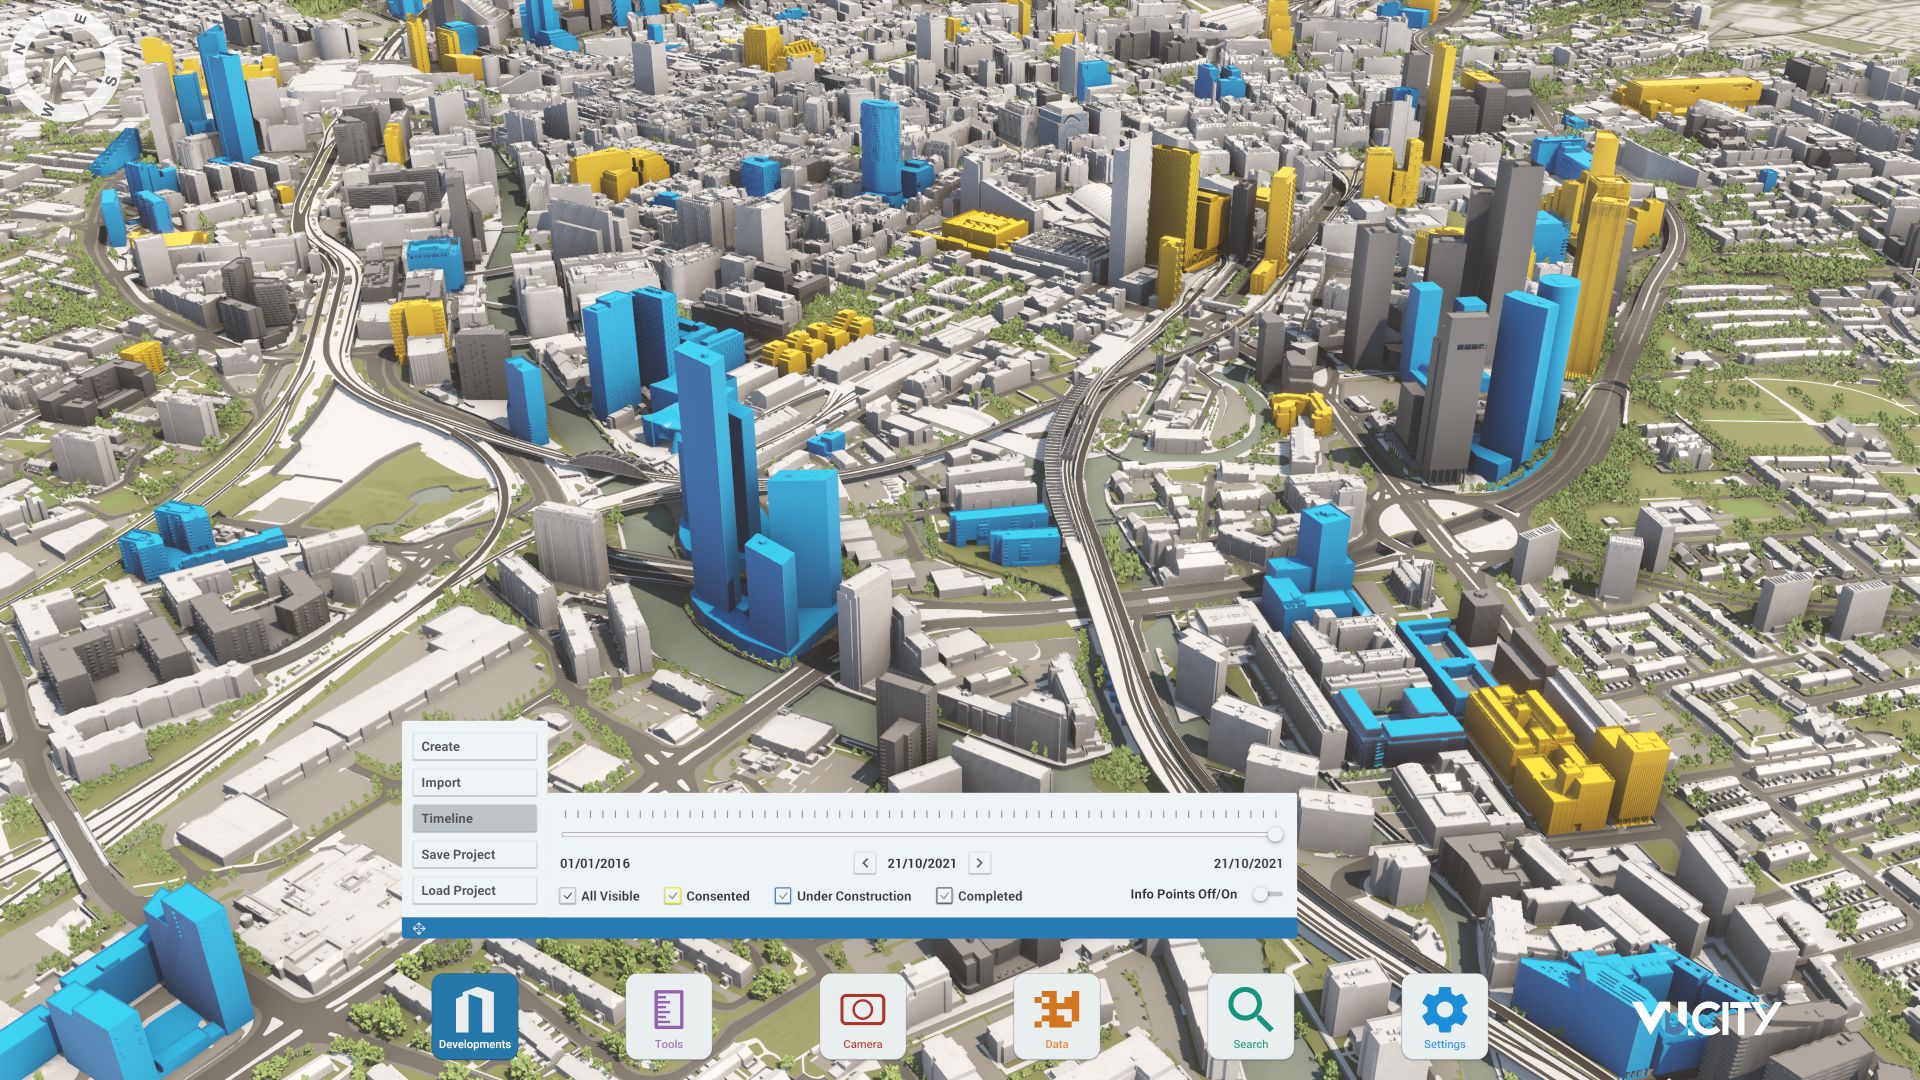 3D Model of Manchester & Digital Twin for Urban Planning & Design